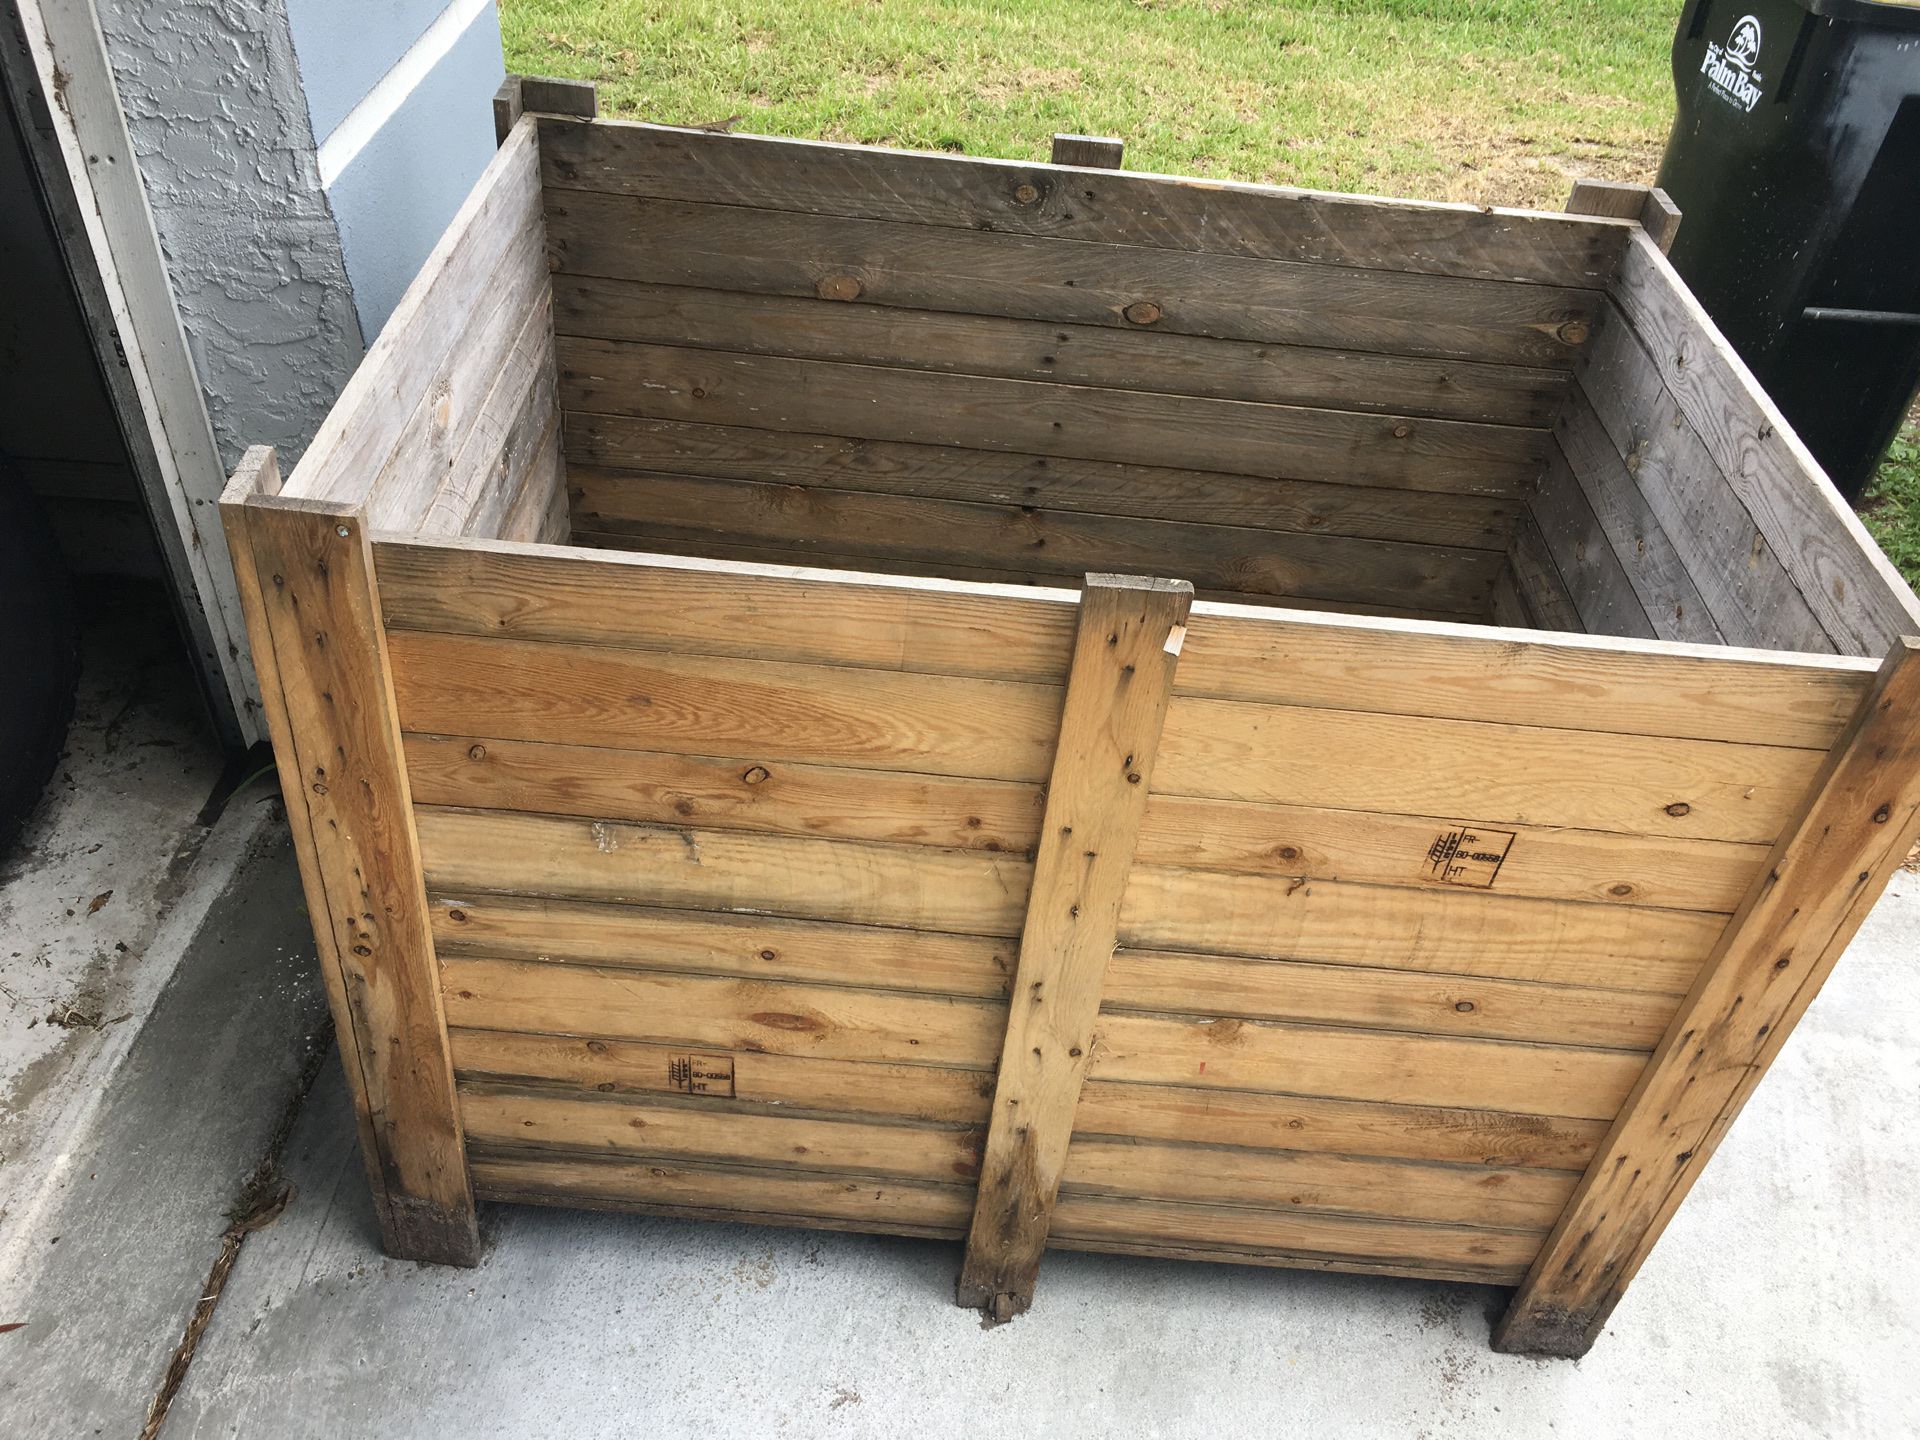 3 x3 x 4 wooden box -heavy